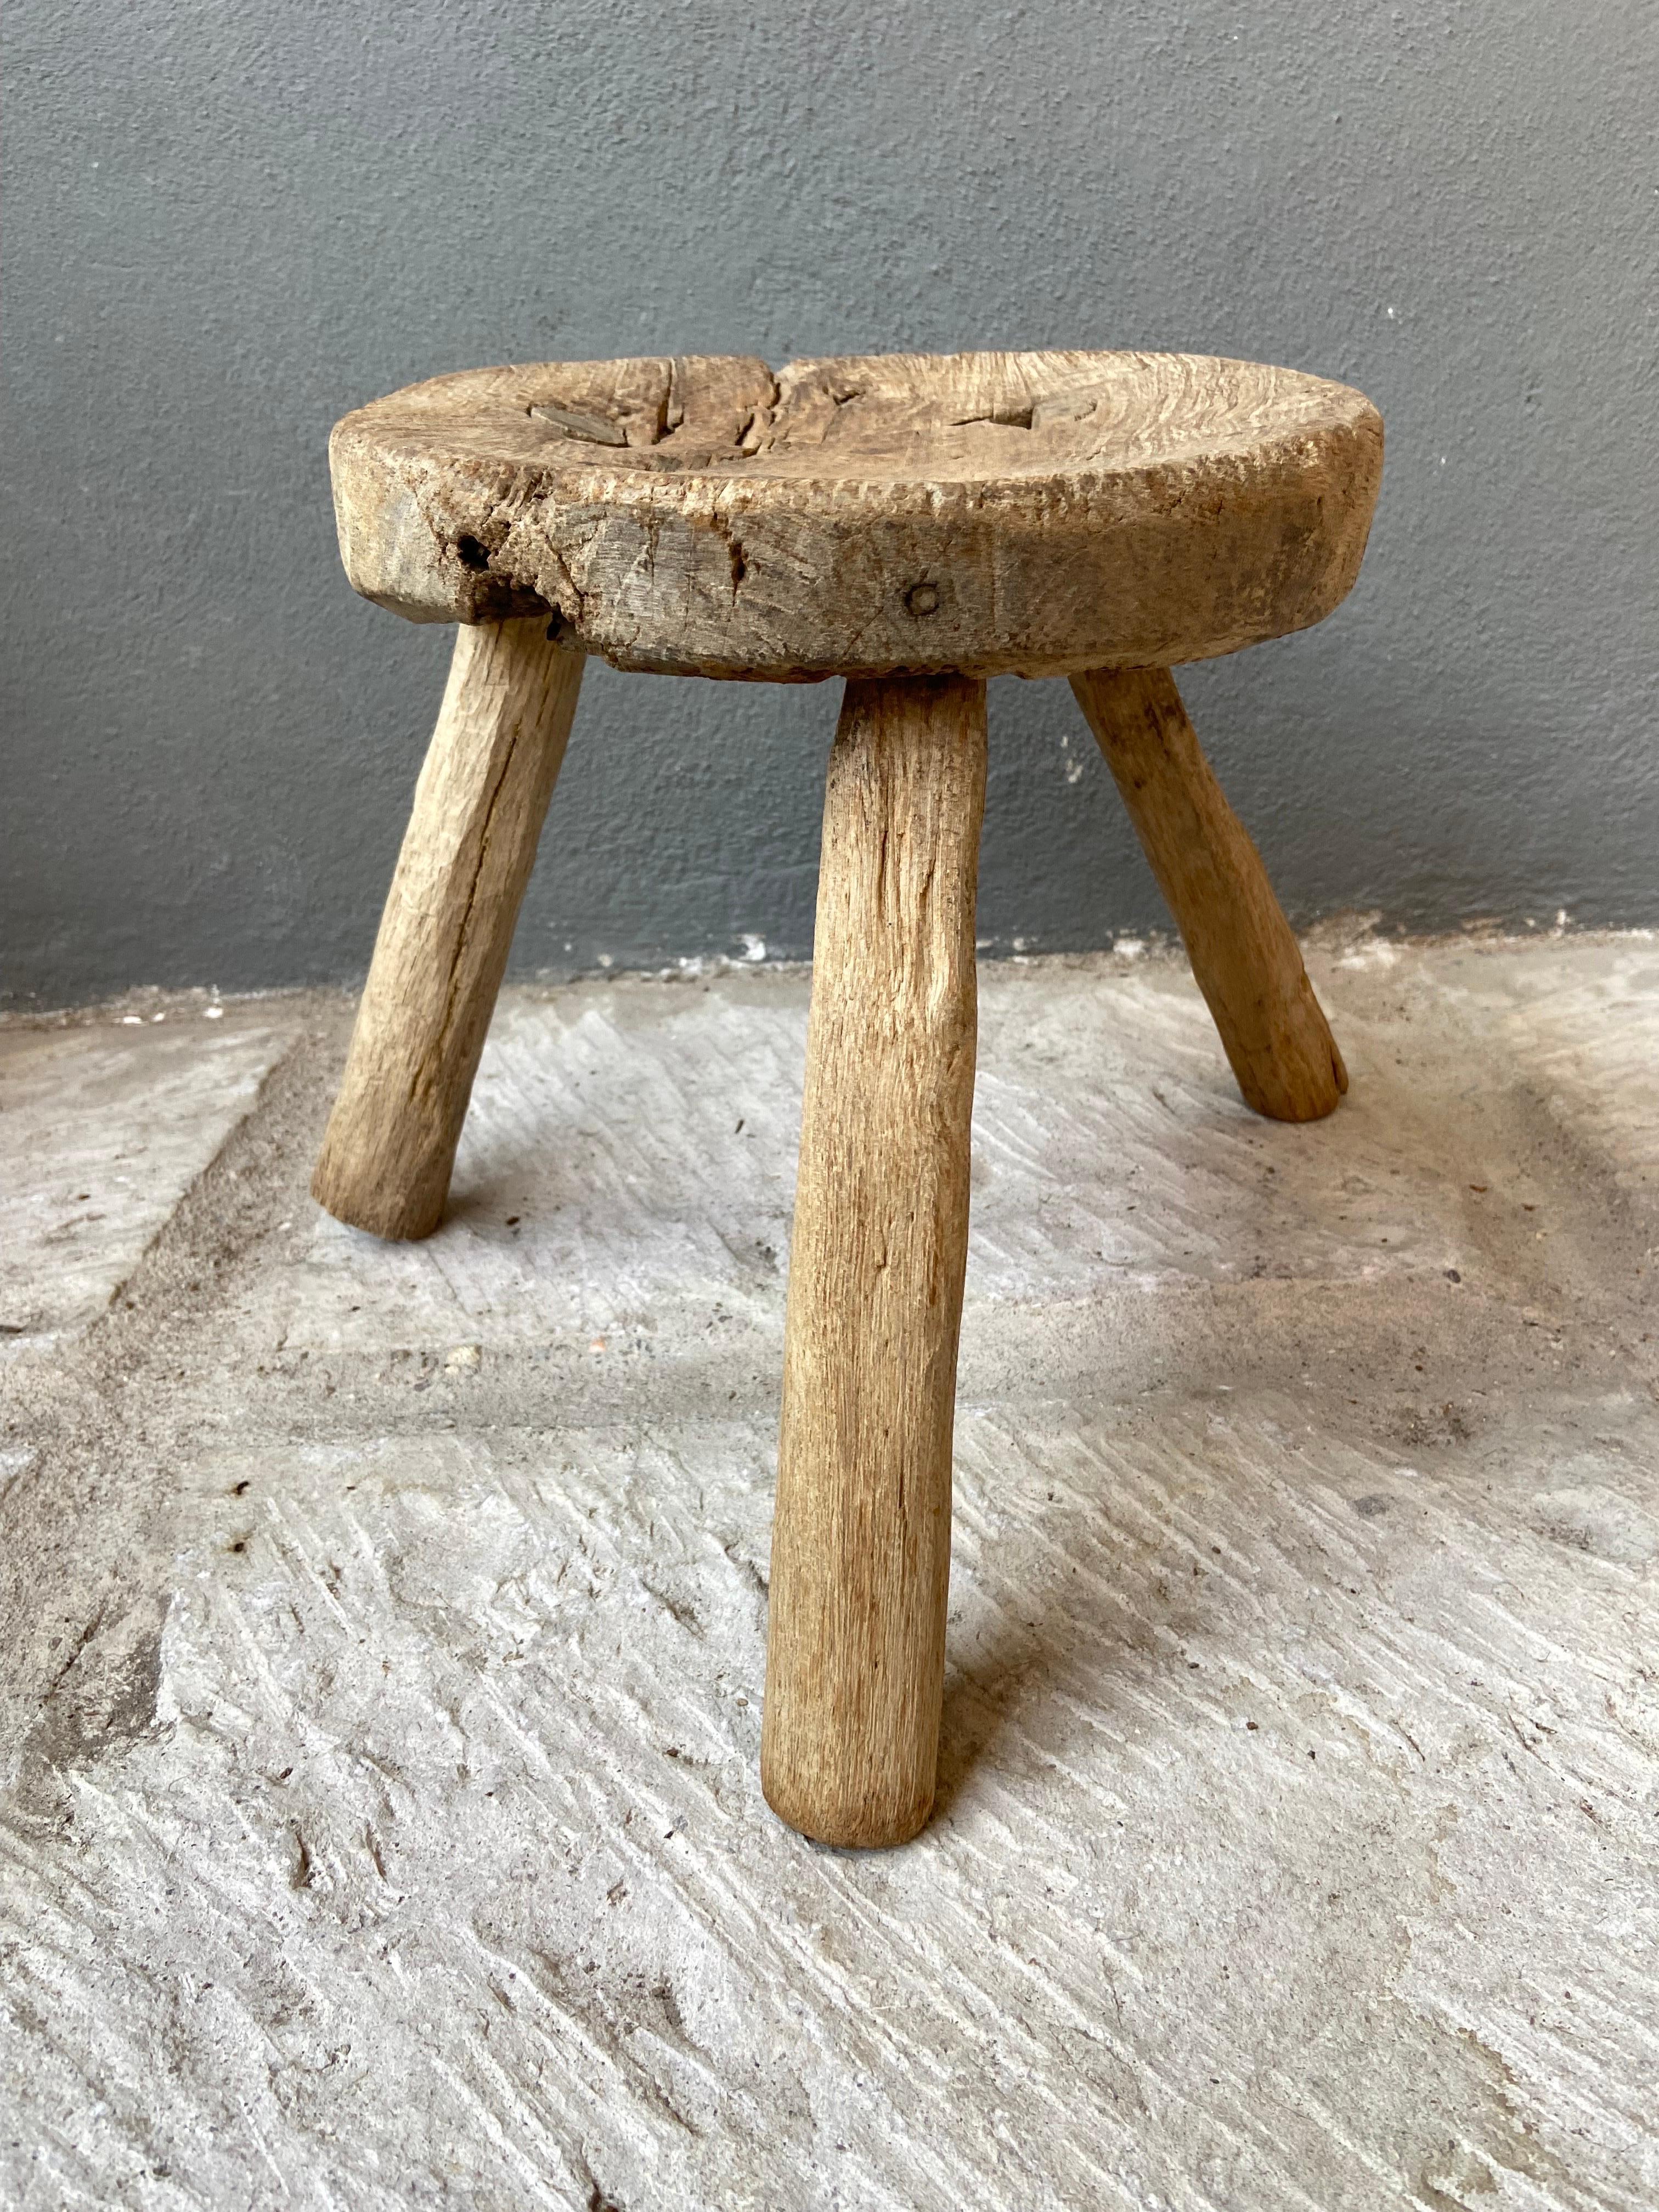 Mesquite hardwood stool from Guanajuato, Mexico, circa 1940´s.